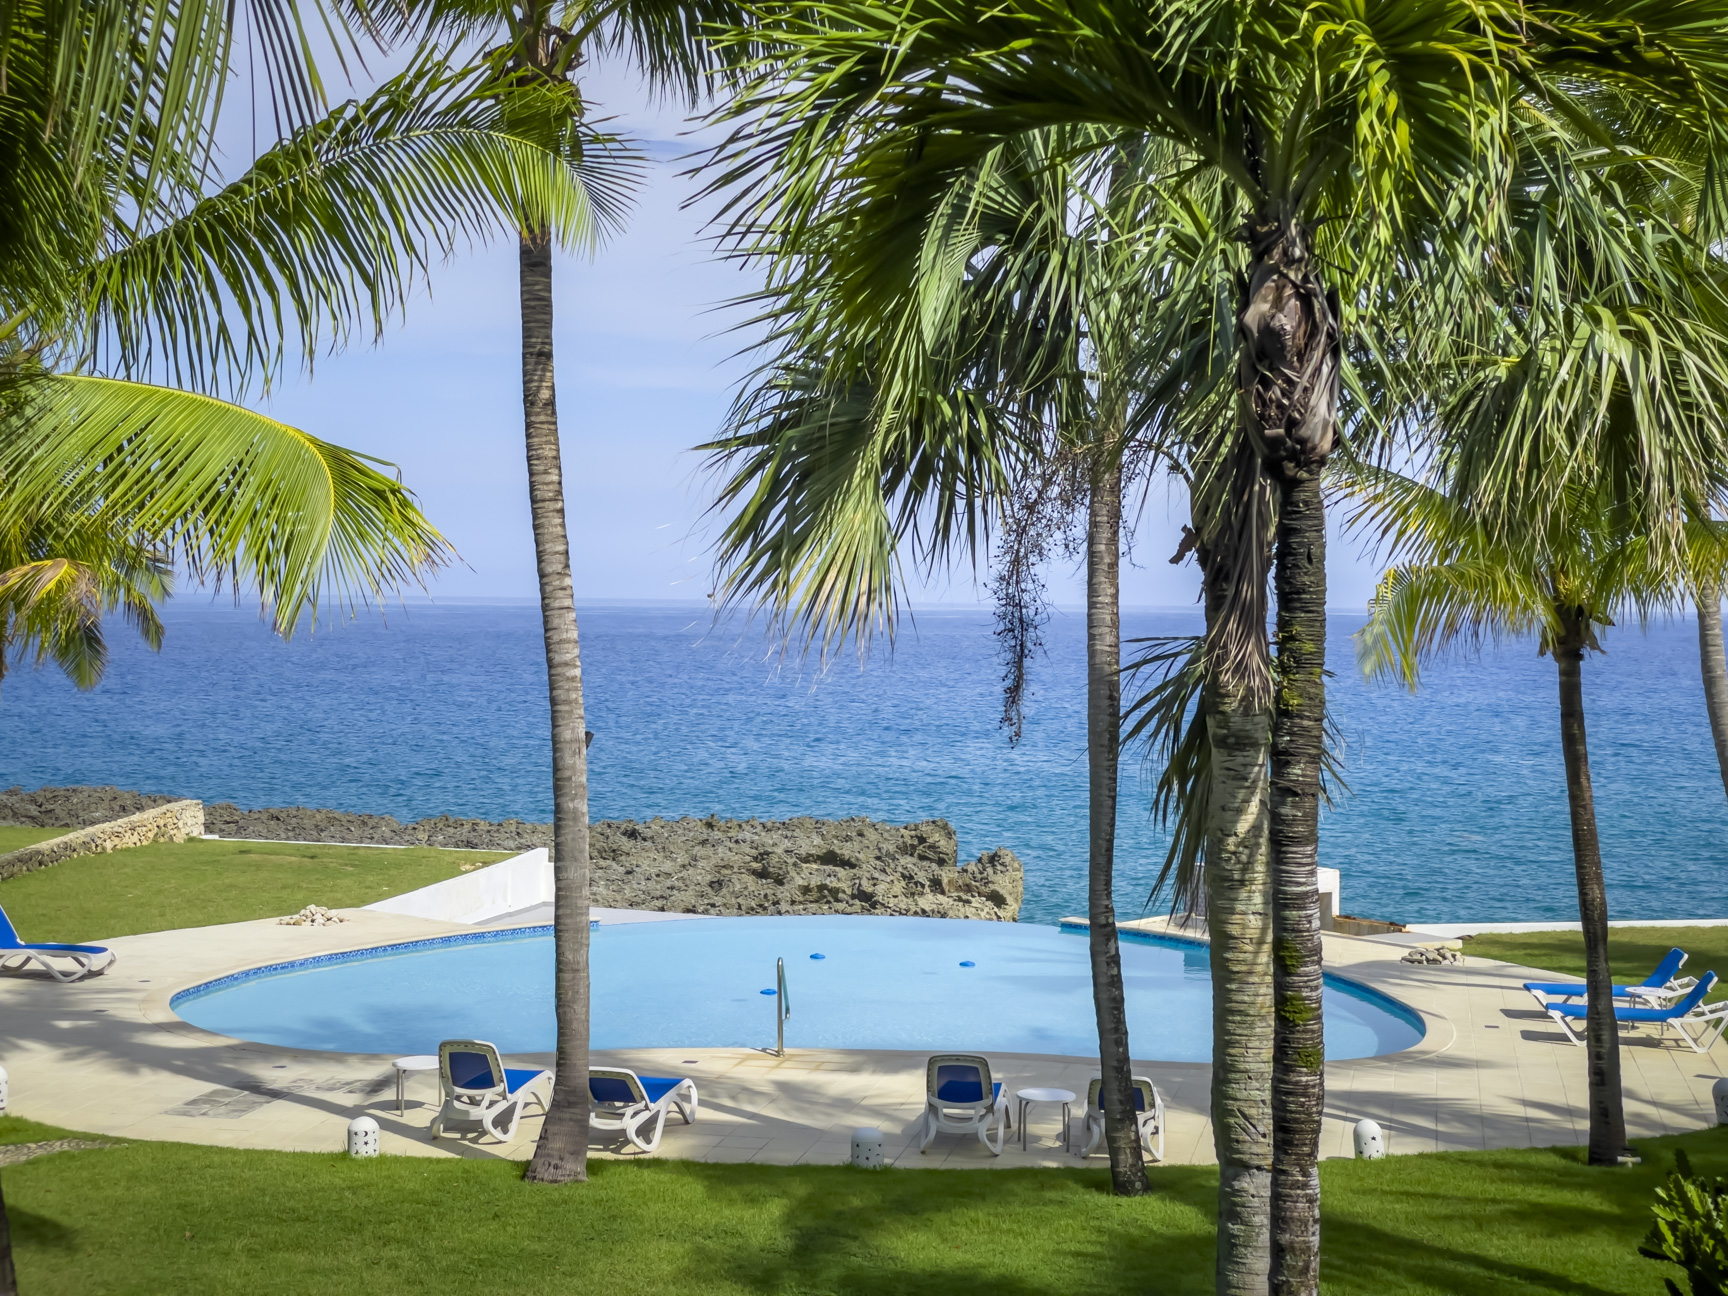 Playa Chiquita 2 Bedroom Condos for sale Pool and Ocean Views